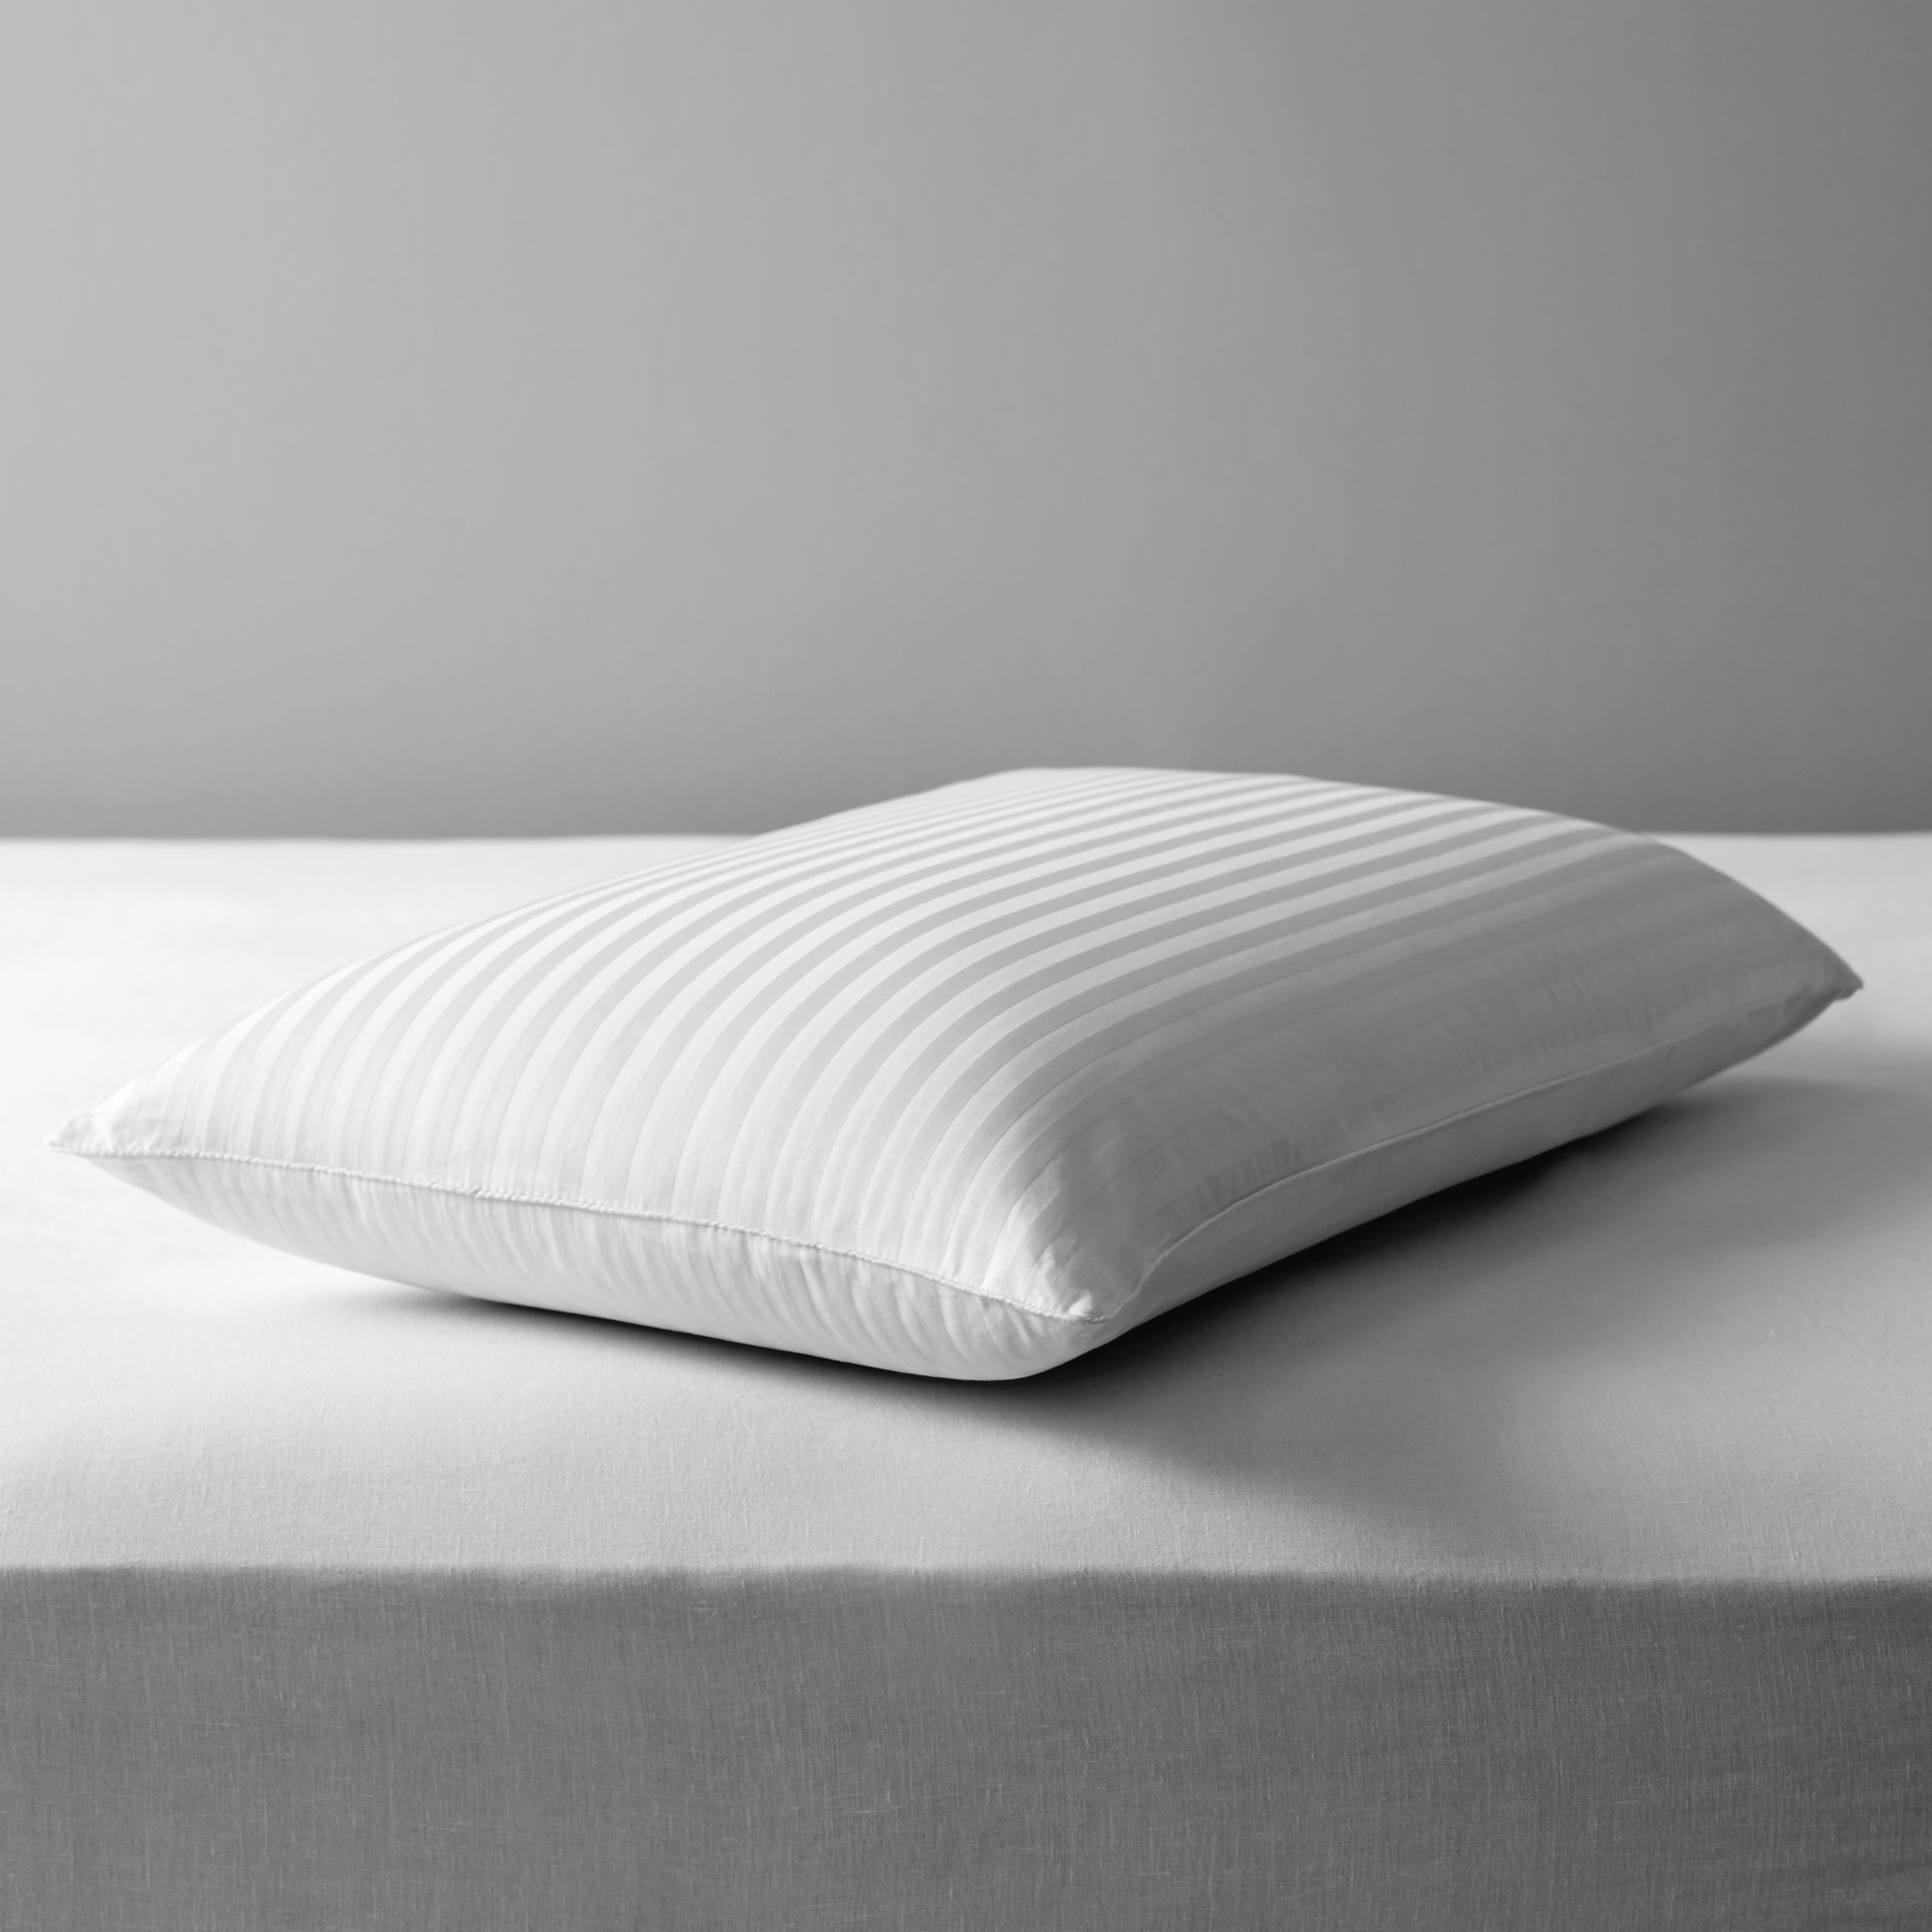 dunlopillo latex pillow review